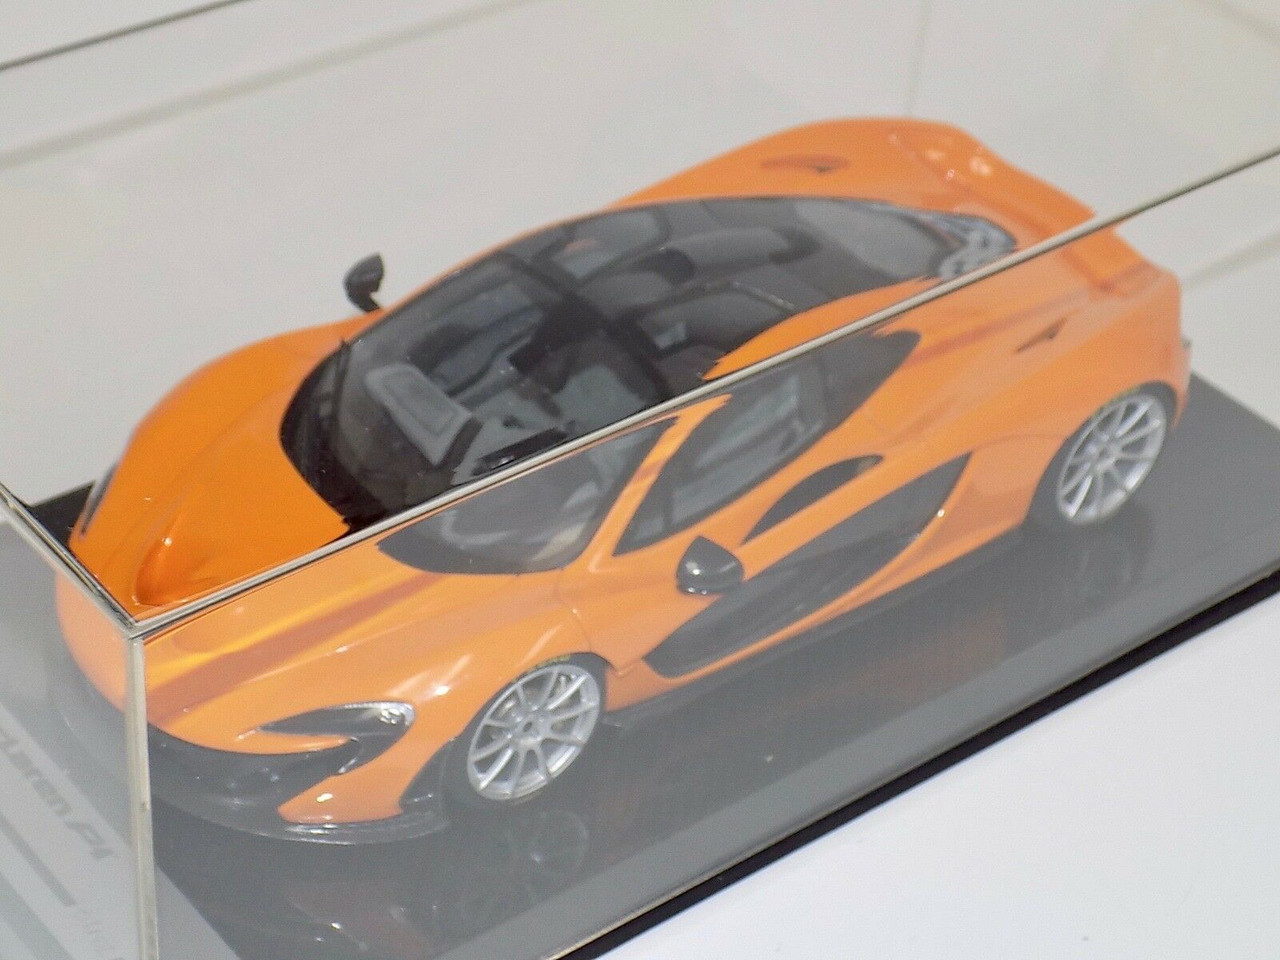 1/18 Tecnomodel McLaren P1 (Papaya Orange with Silver Wheels) with Carbon Base Resin Car Model Limited 01/01